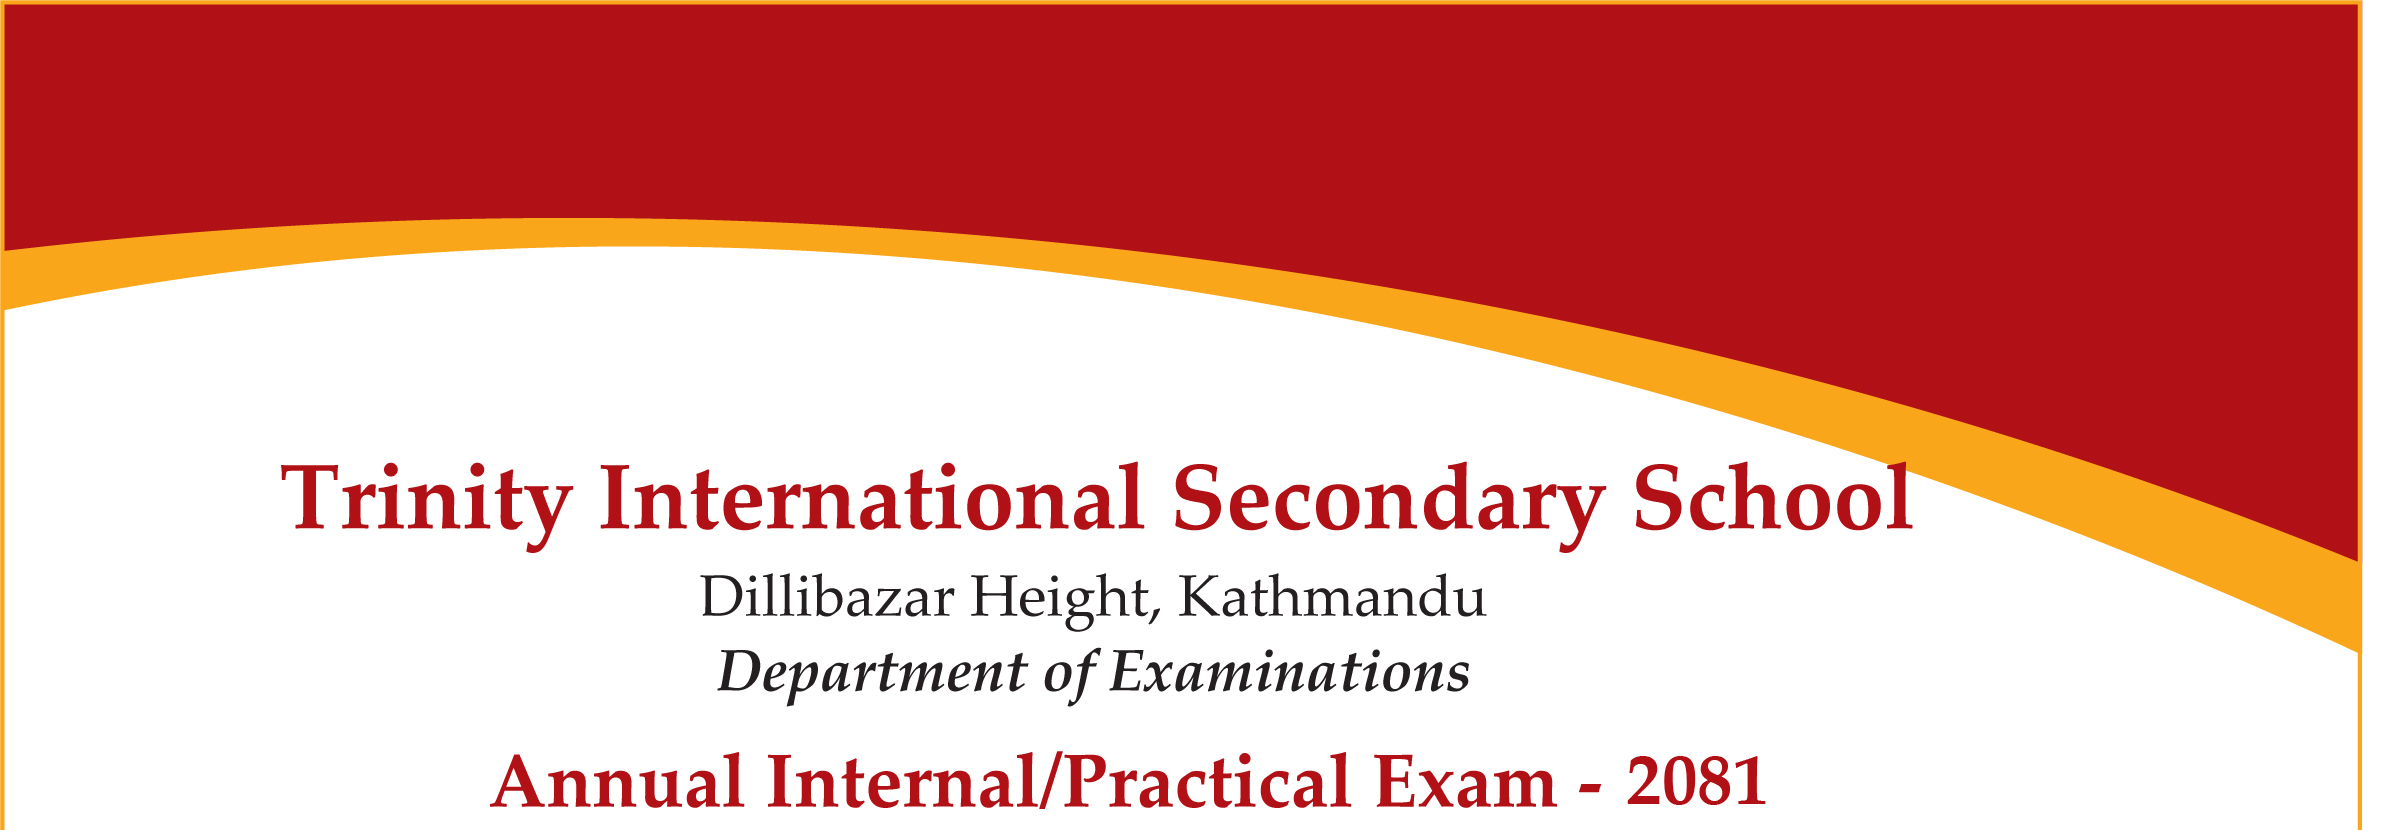 NEB Annual Internal Practical Exam - 2081